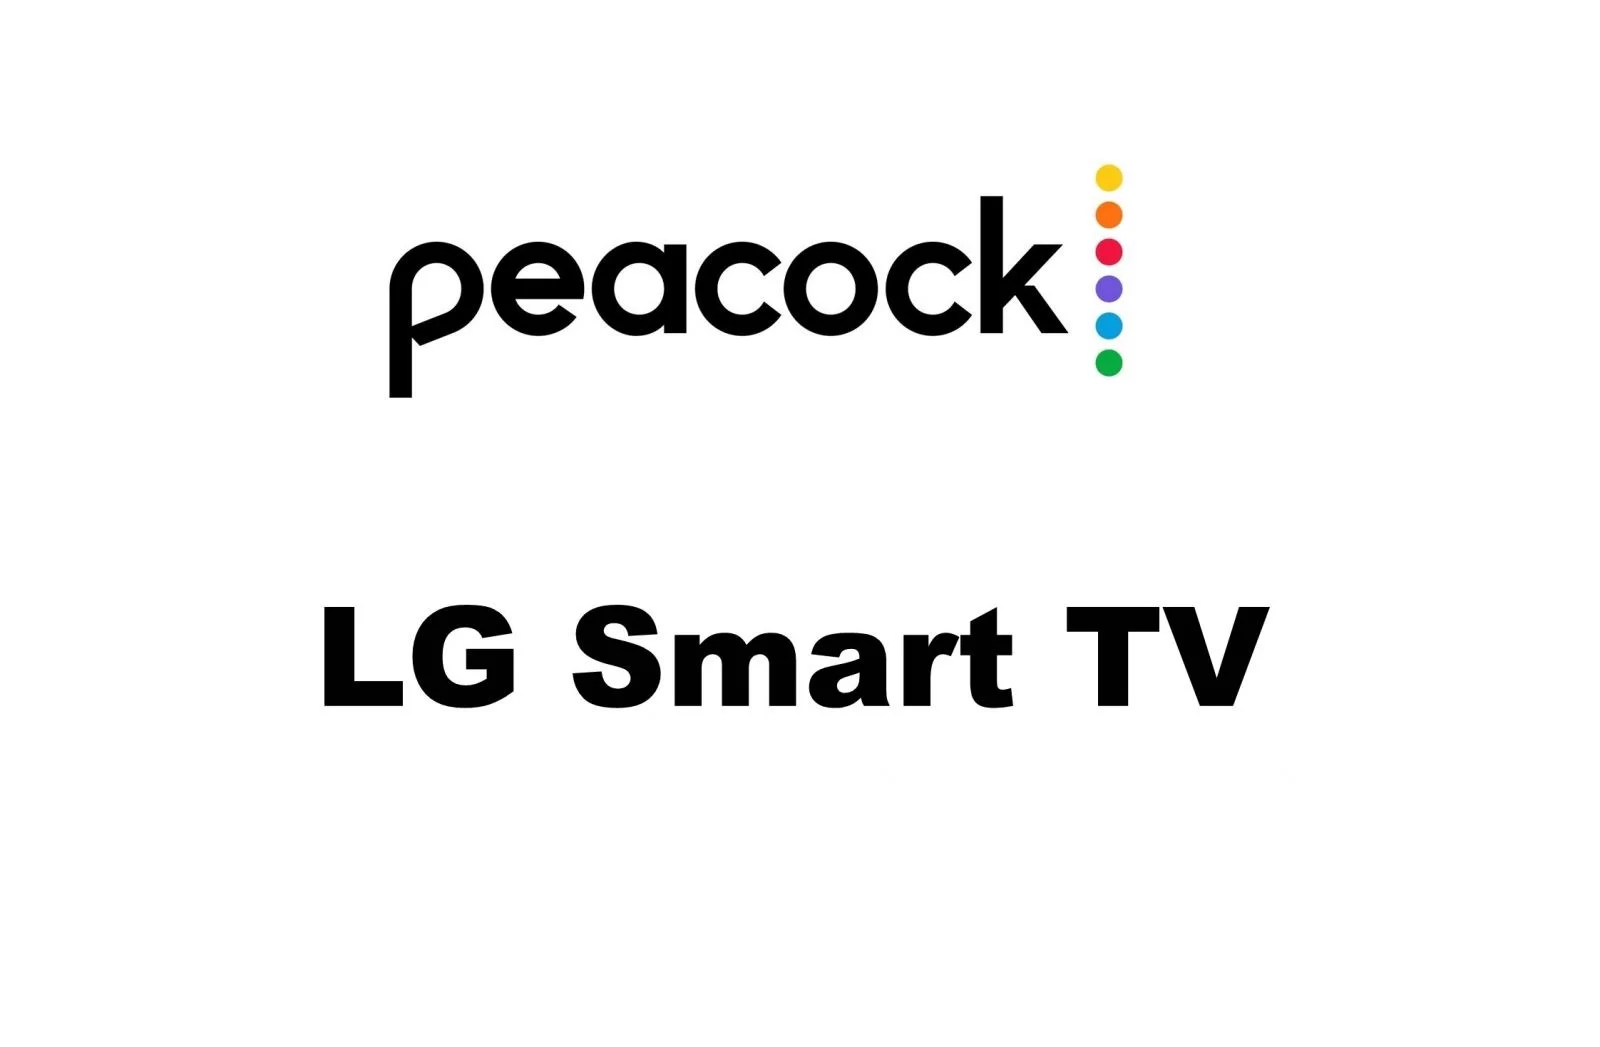 Peacock On LG Smart TV